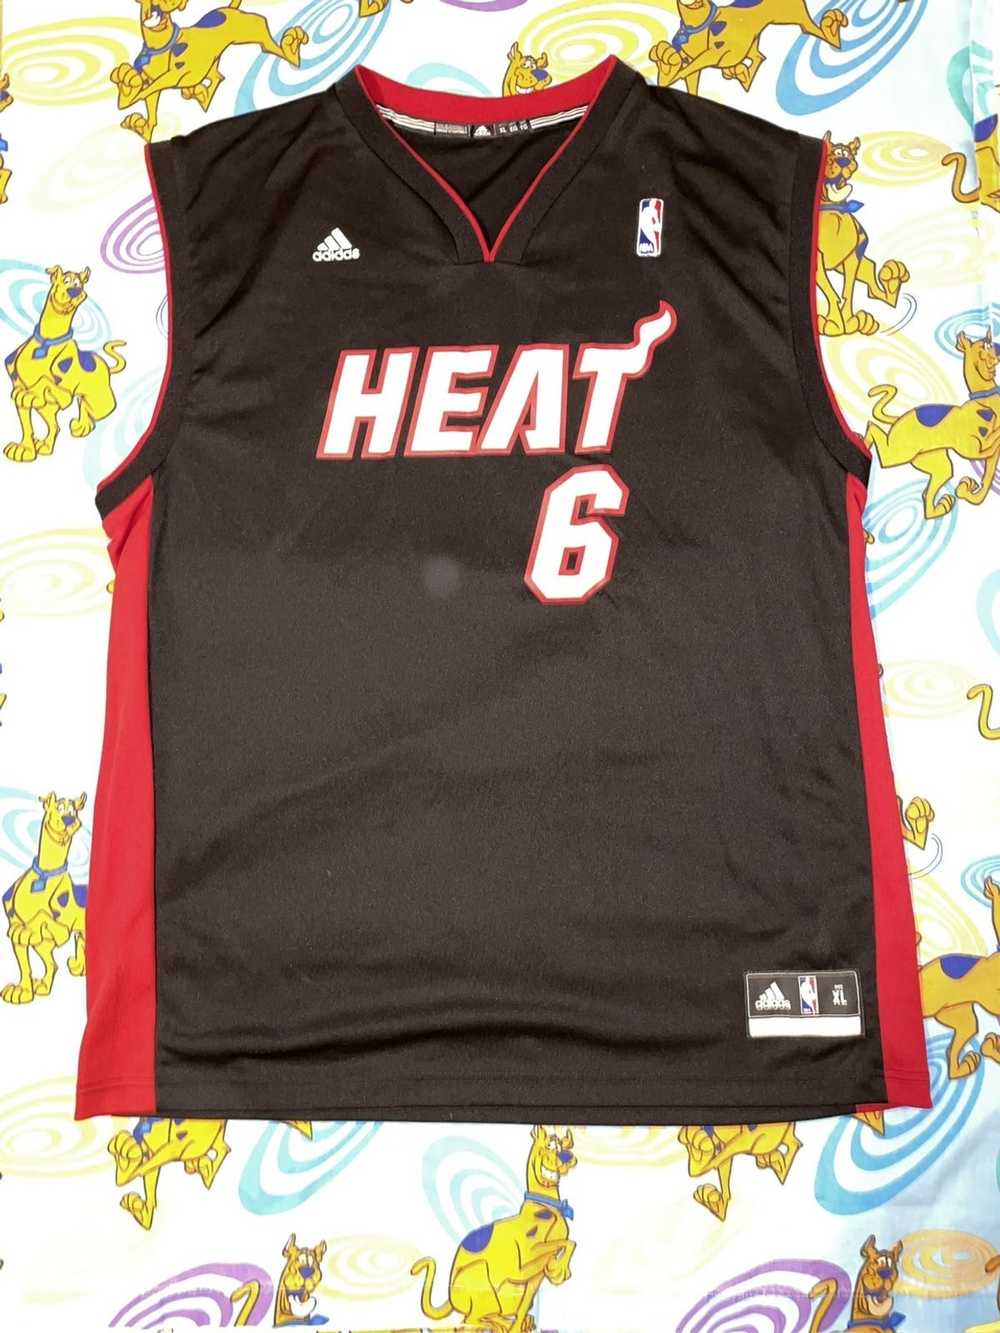 Men's Adidas Miami Heat Dwyane Wade Legacy NBA Basketball